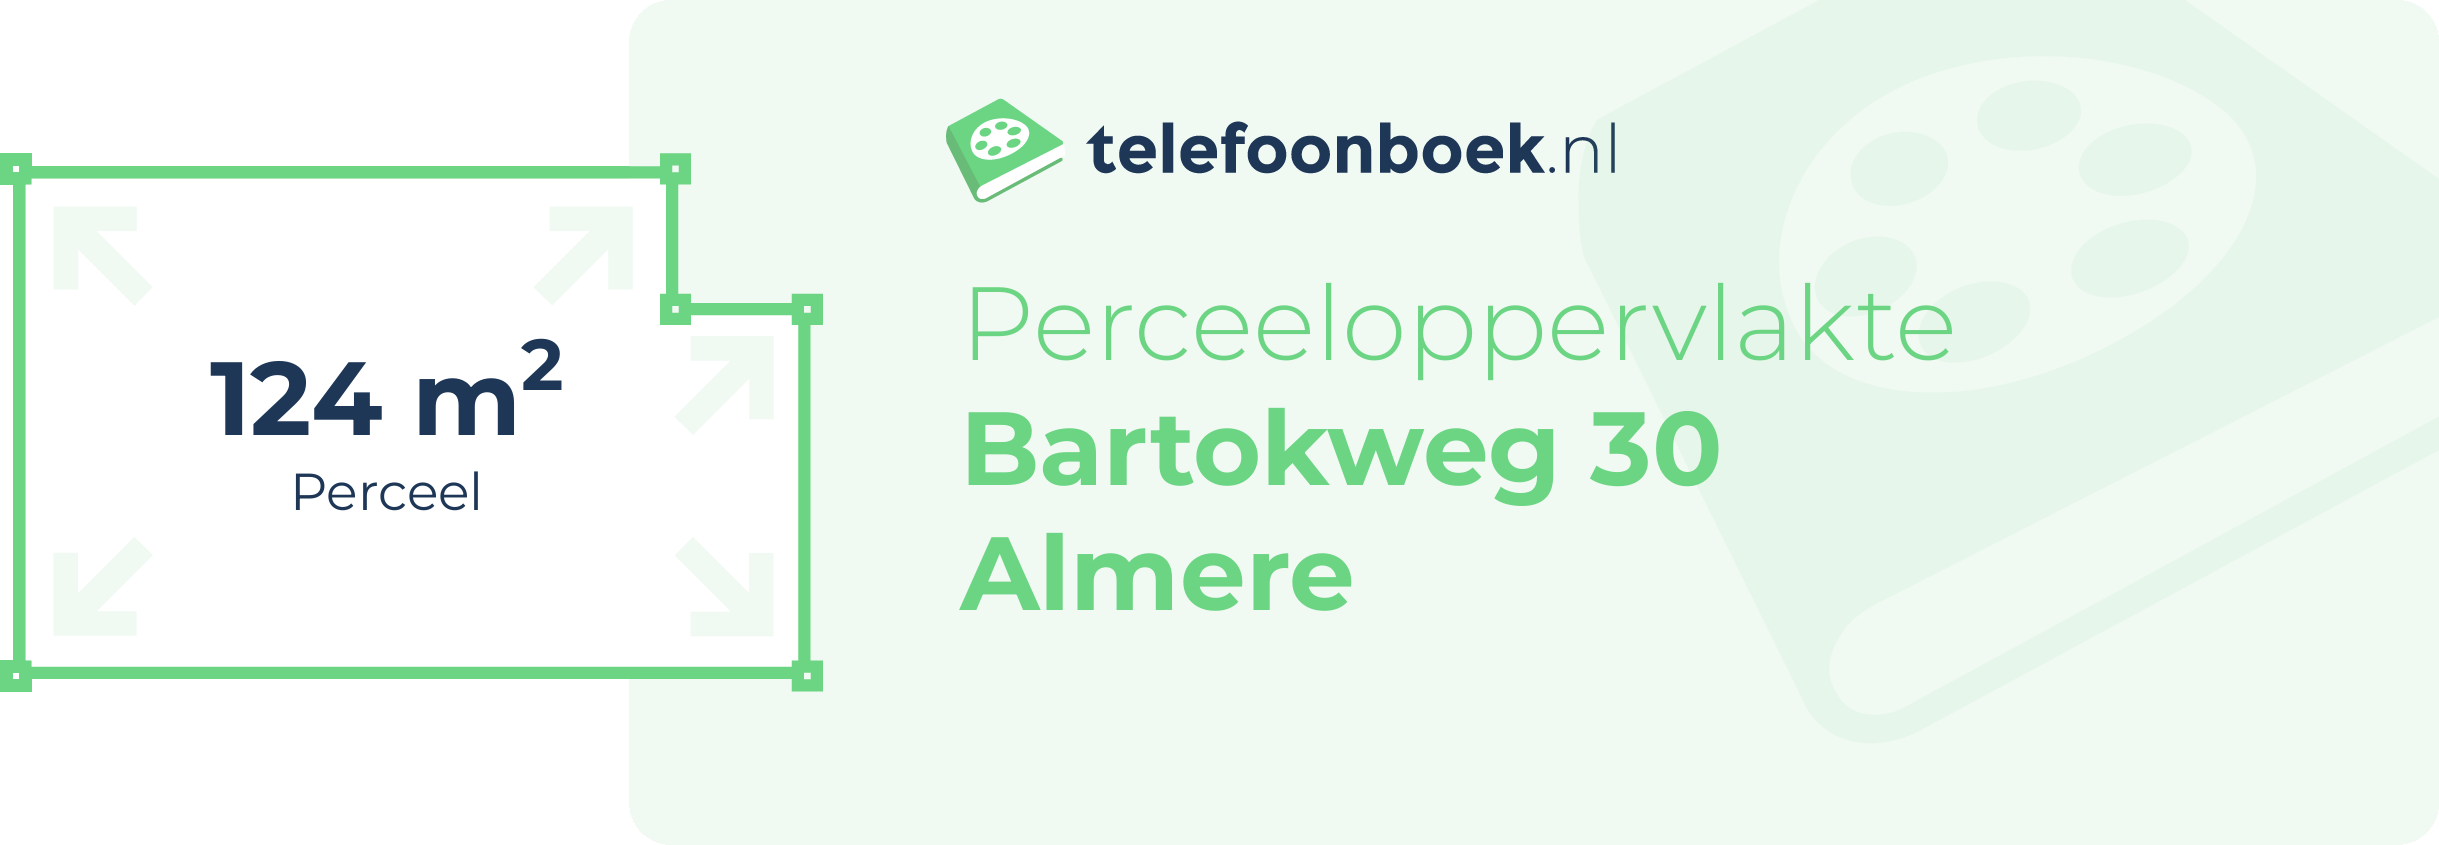 Perceeloppervlakte Bartokweg 30 Almere